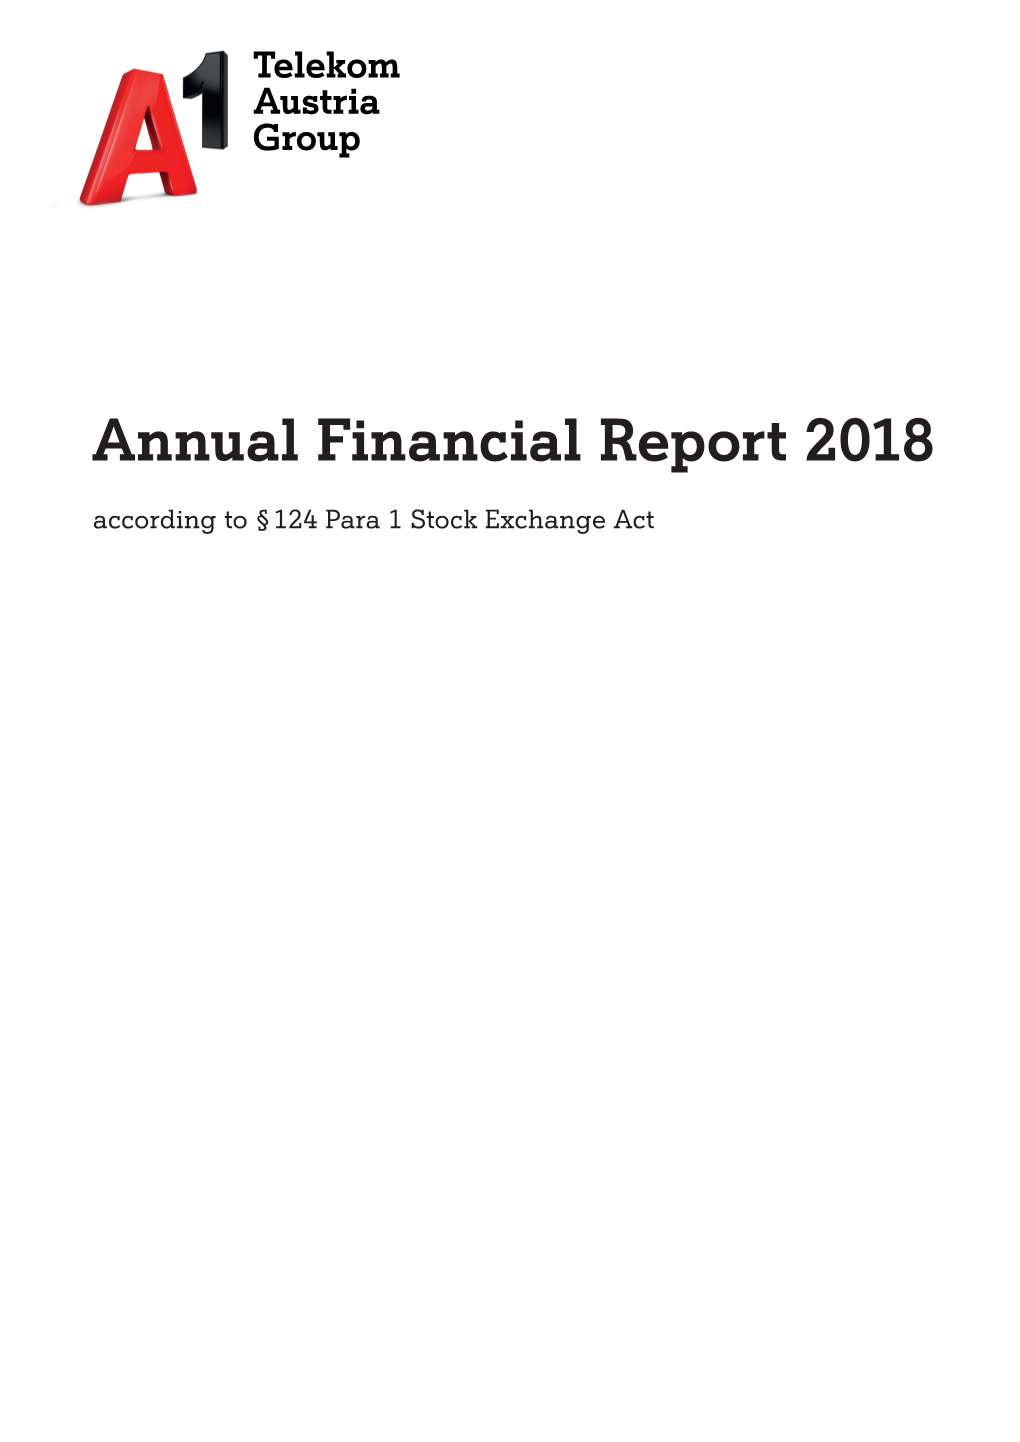 Jahresfinanzbericht 2018 V2.Indd